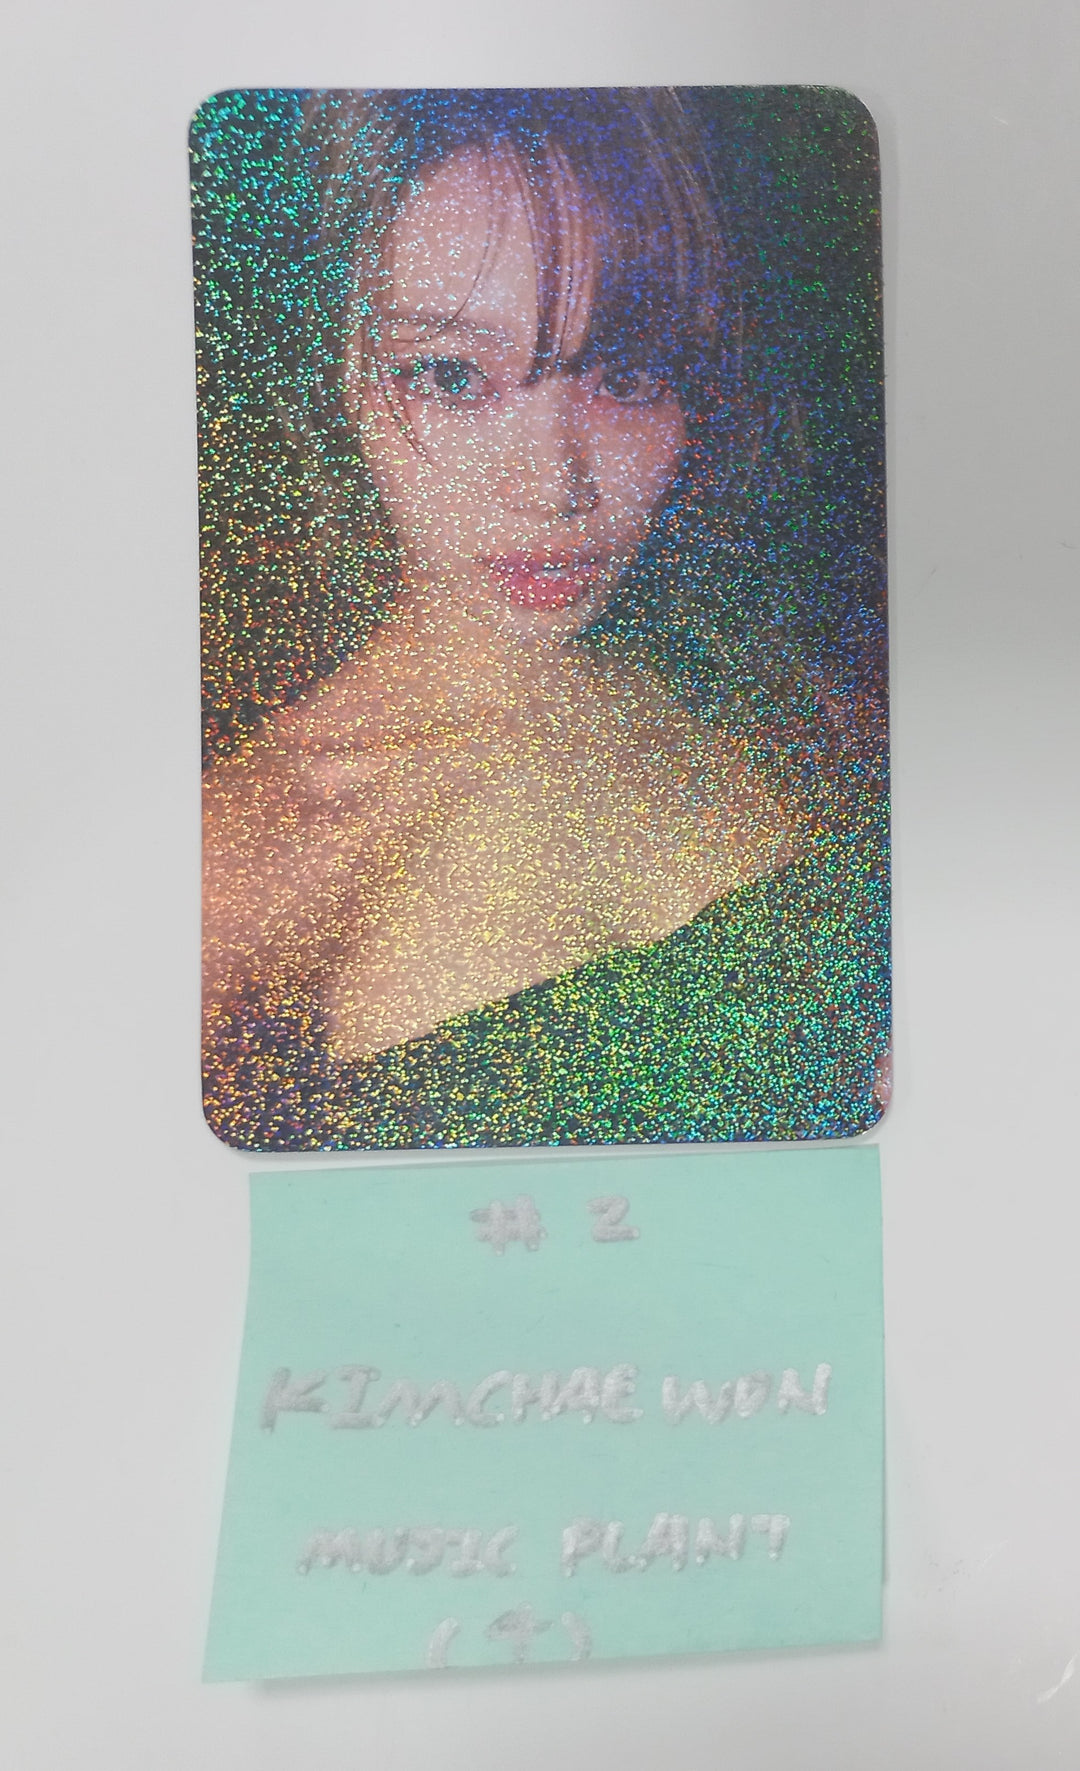 Le Sserafim 3rd Mini "EASY" - Music Plant Pre-Order Benefit Glitter Photocard [24.2.23]